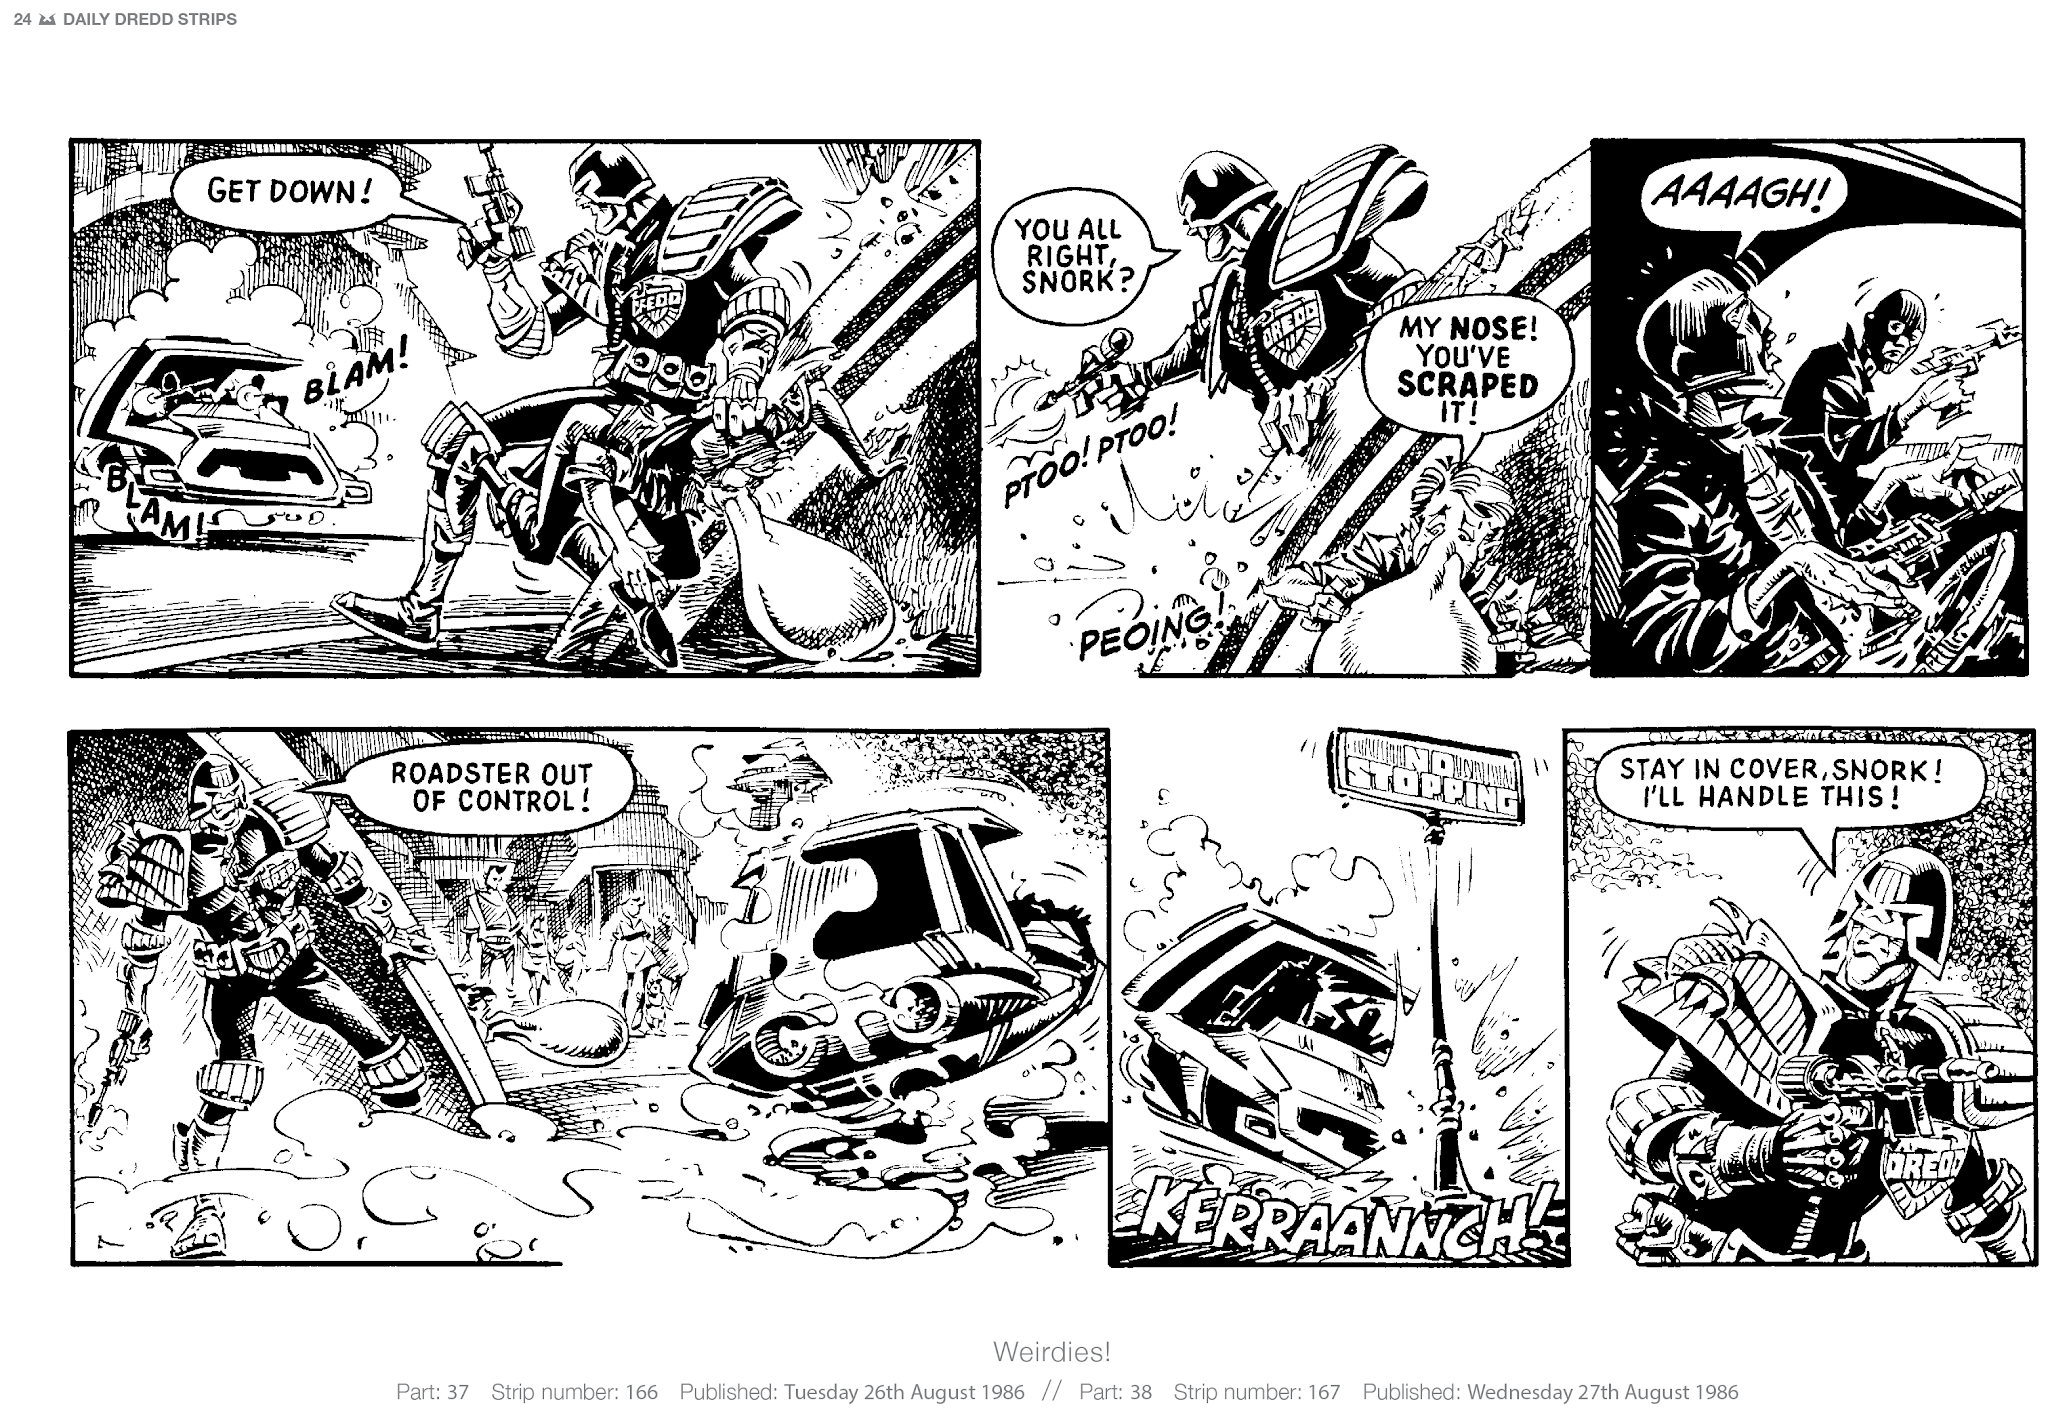 Read online Judge Dredd: The Daily Dredds comic -  Issue # TPB 2 - 27